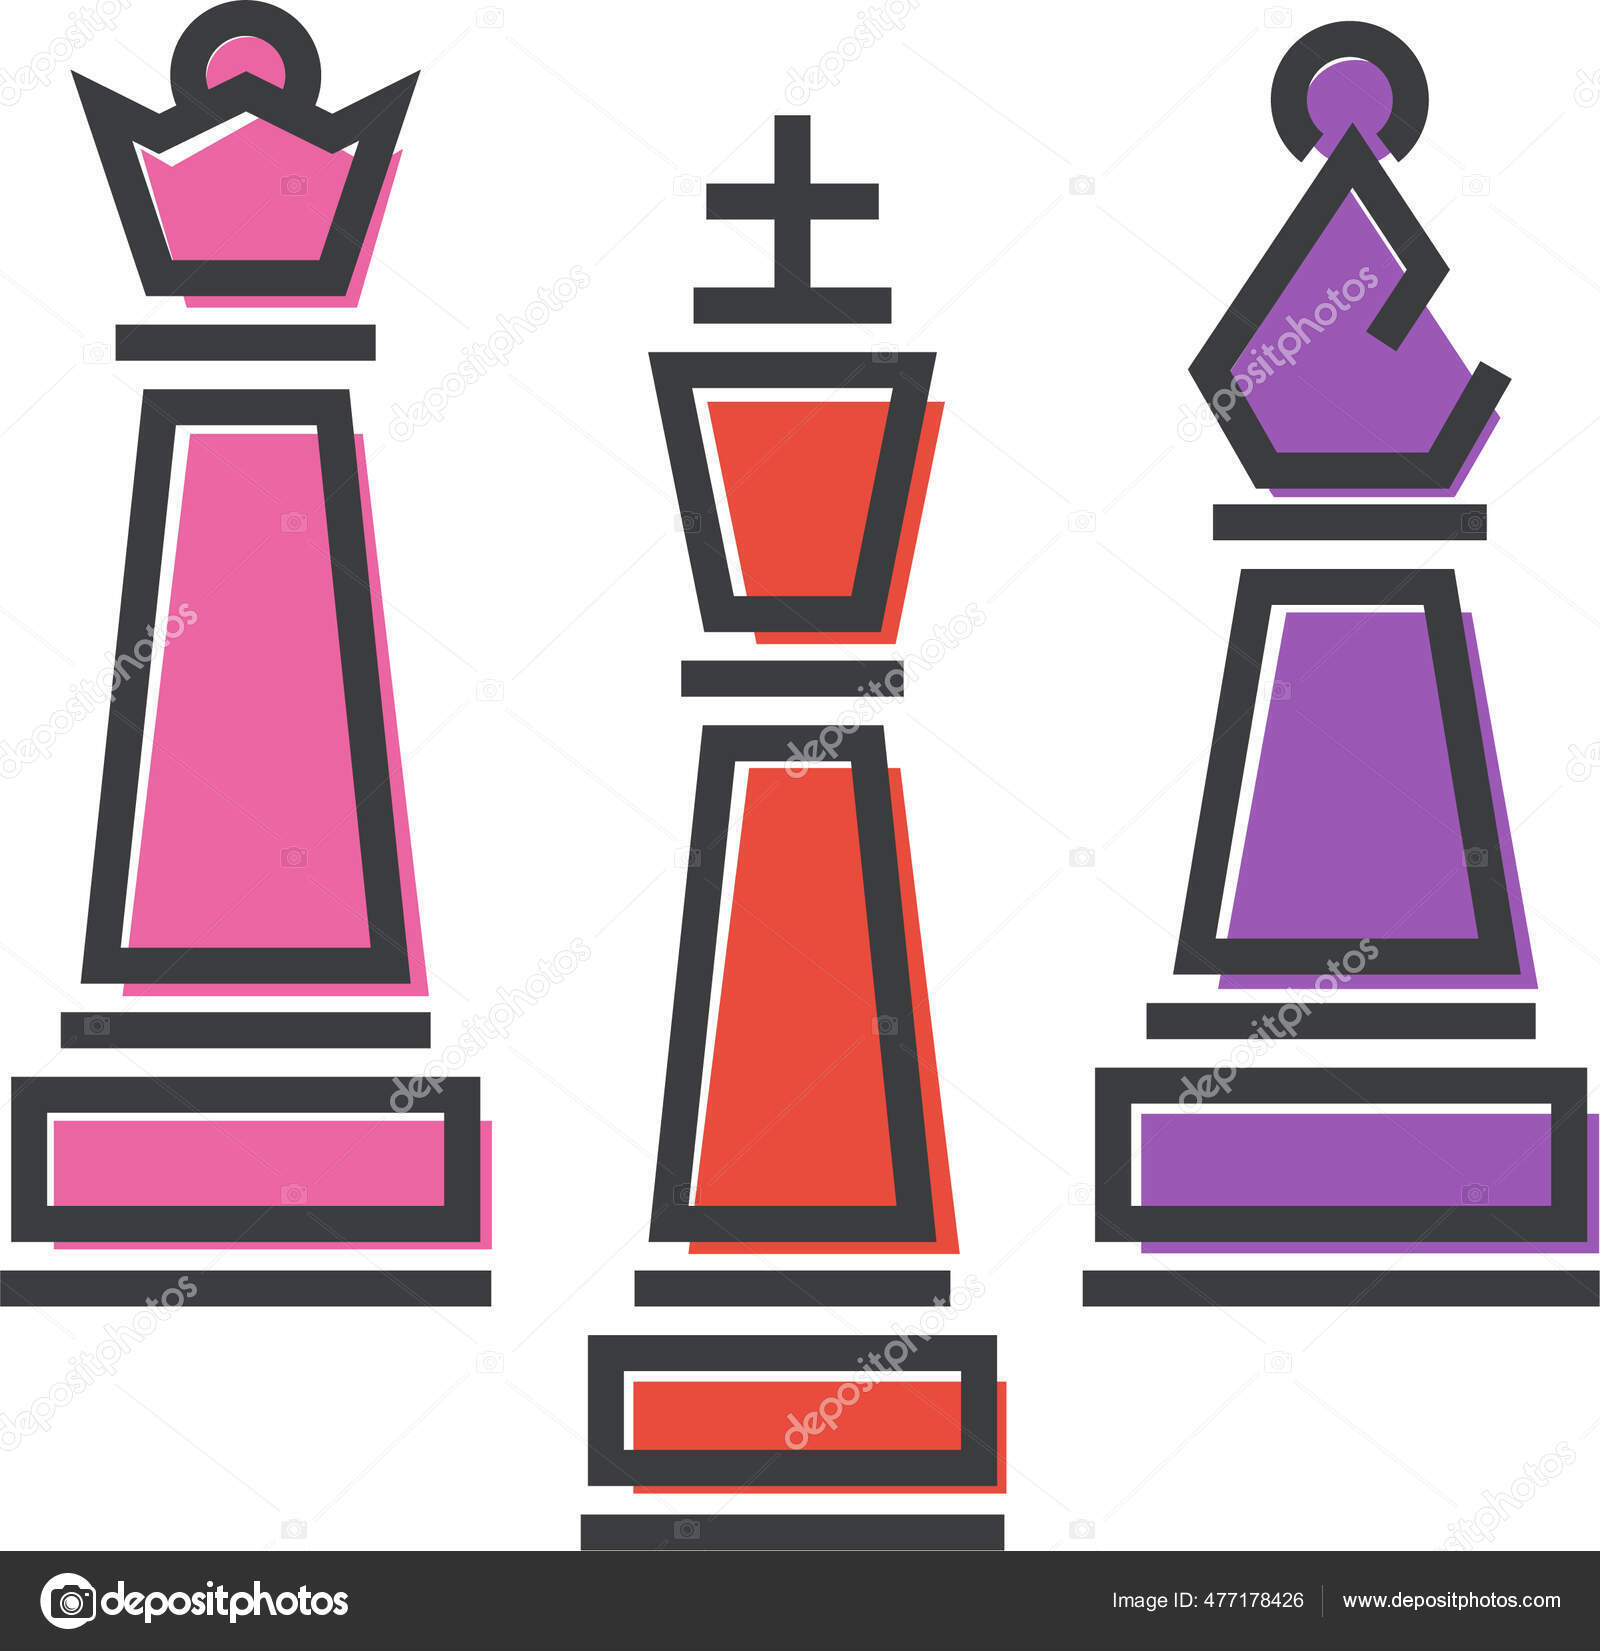 Bispo xadrez - Ícones Sport e Games